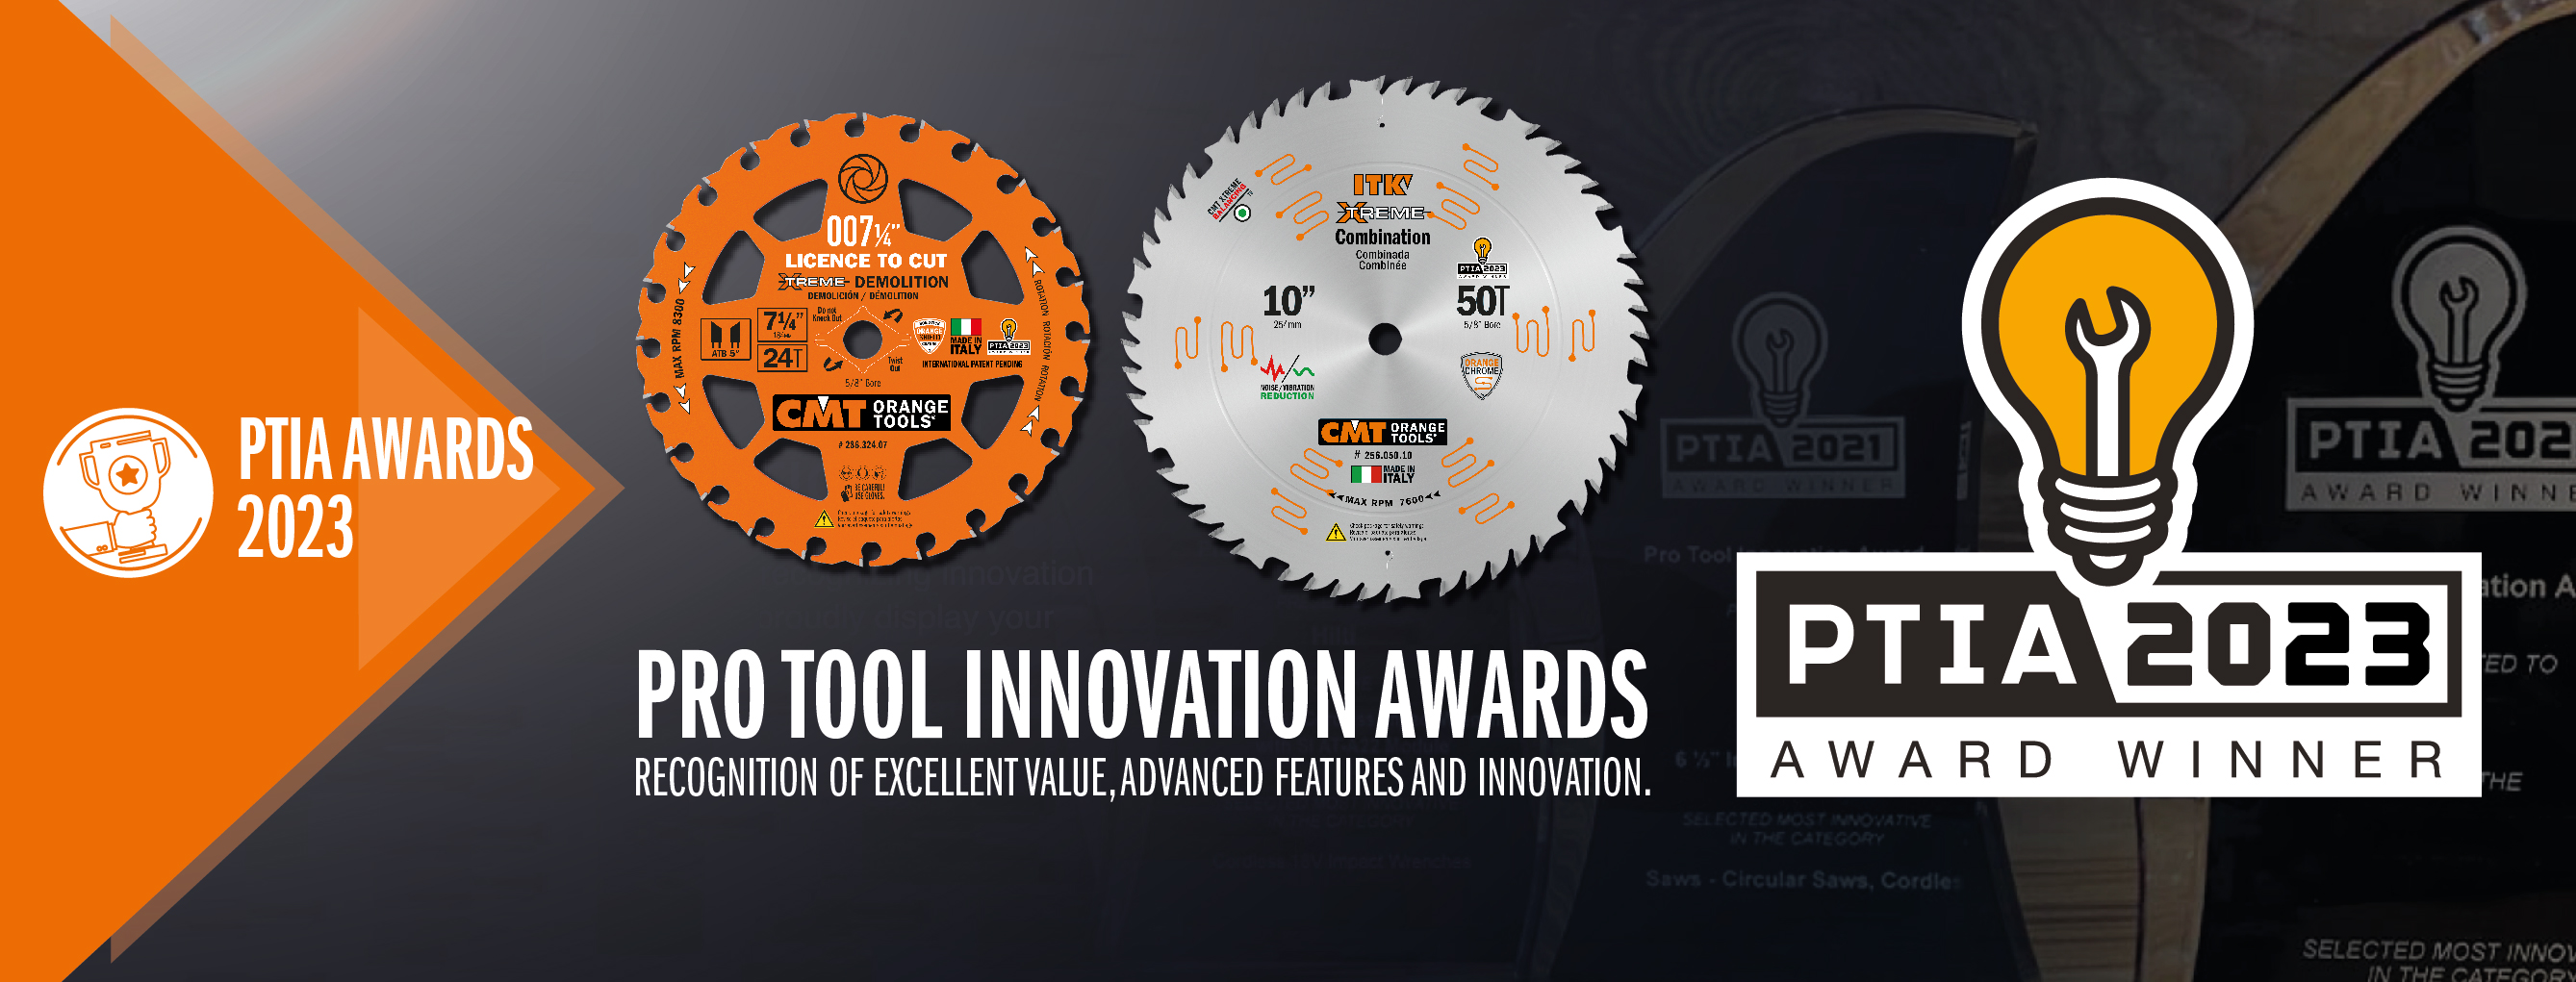 2023 Pro Tool Innovation Award Winner for ITK XTREME Tools